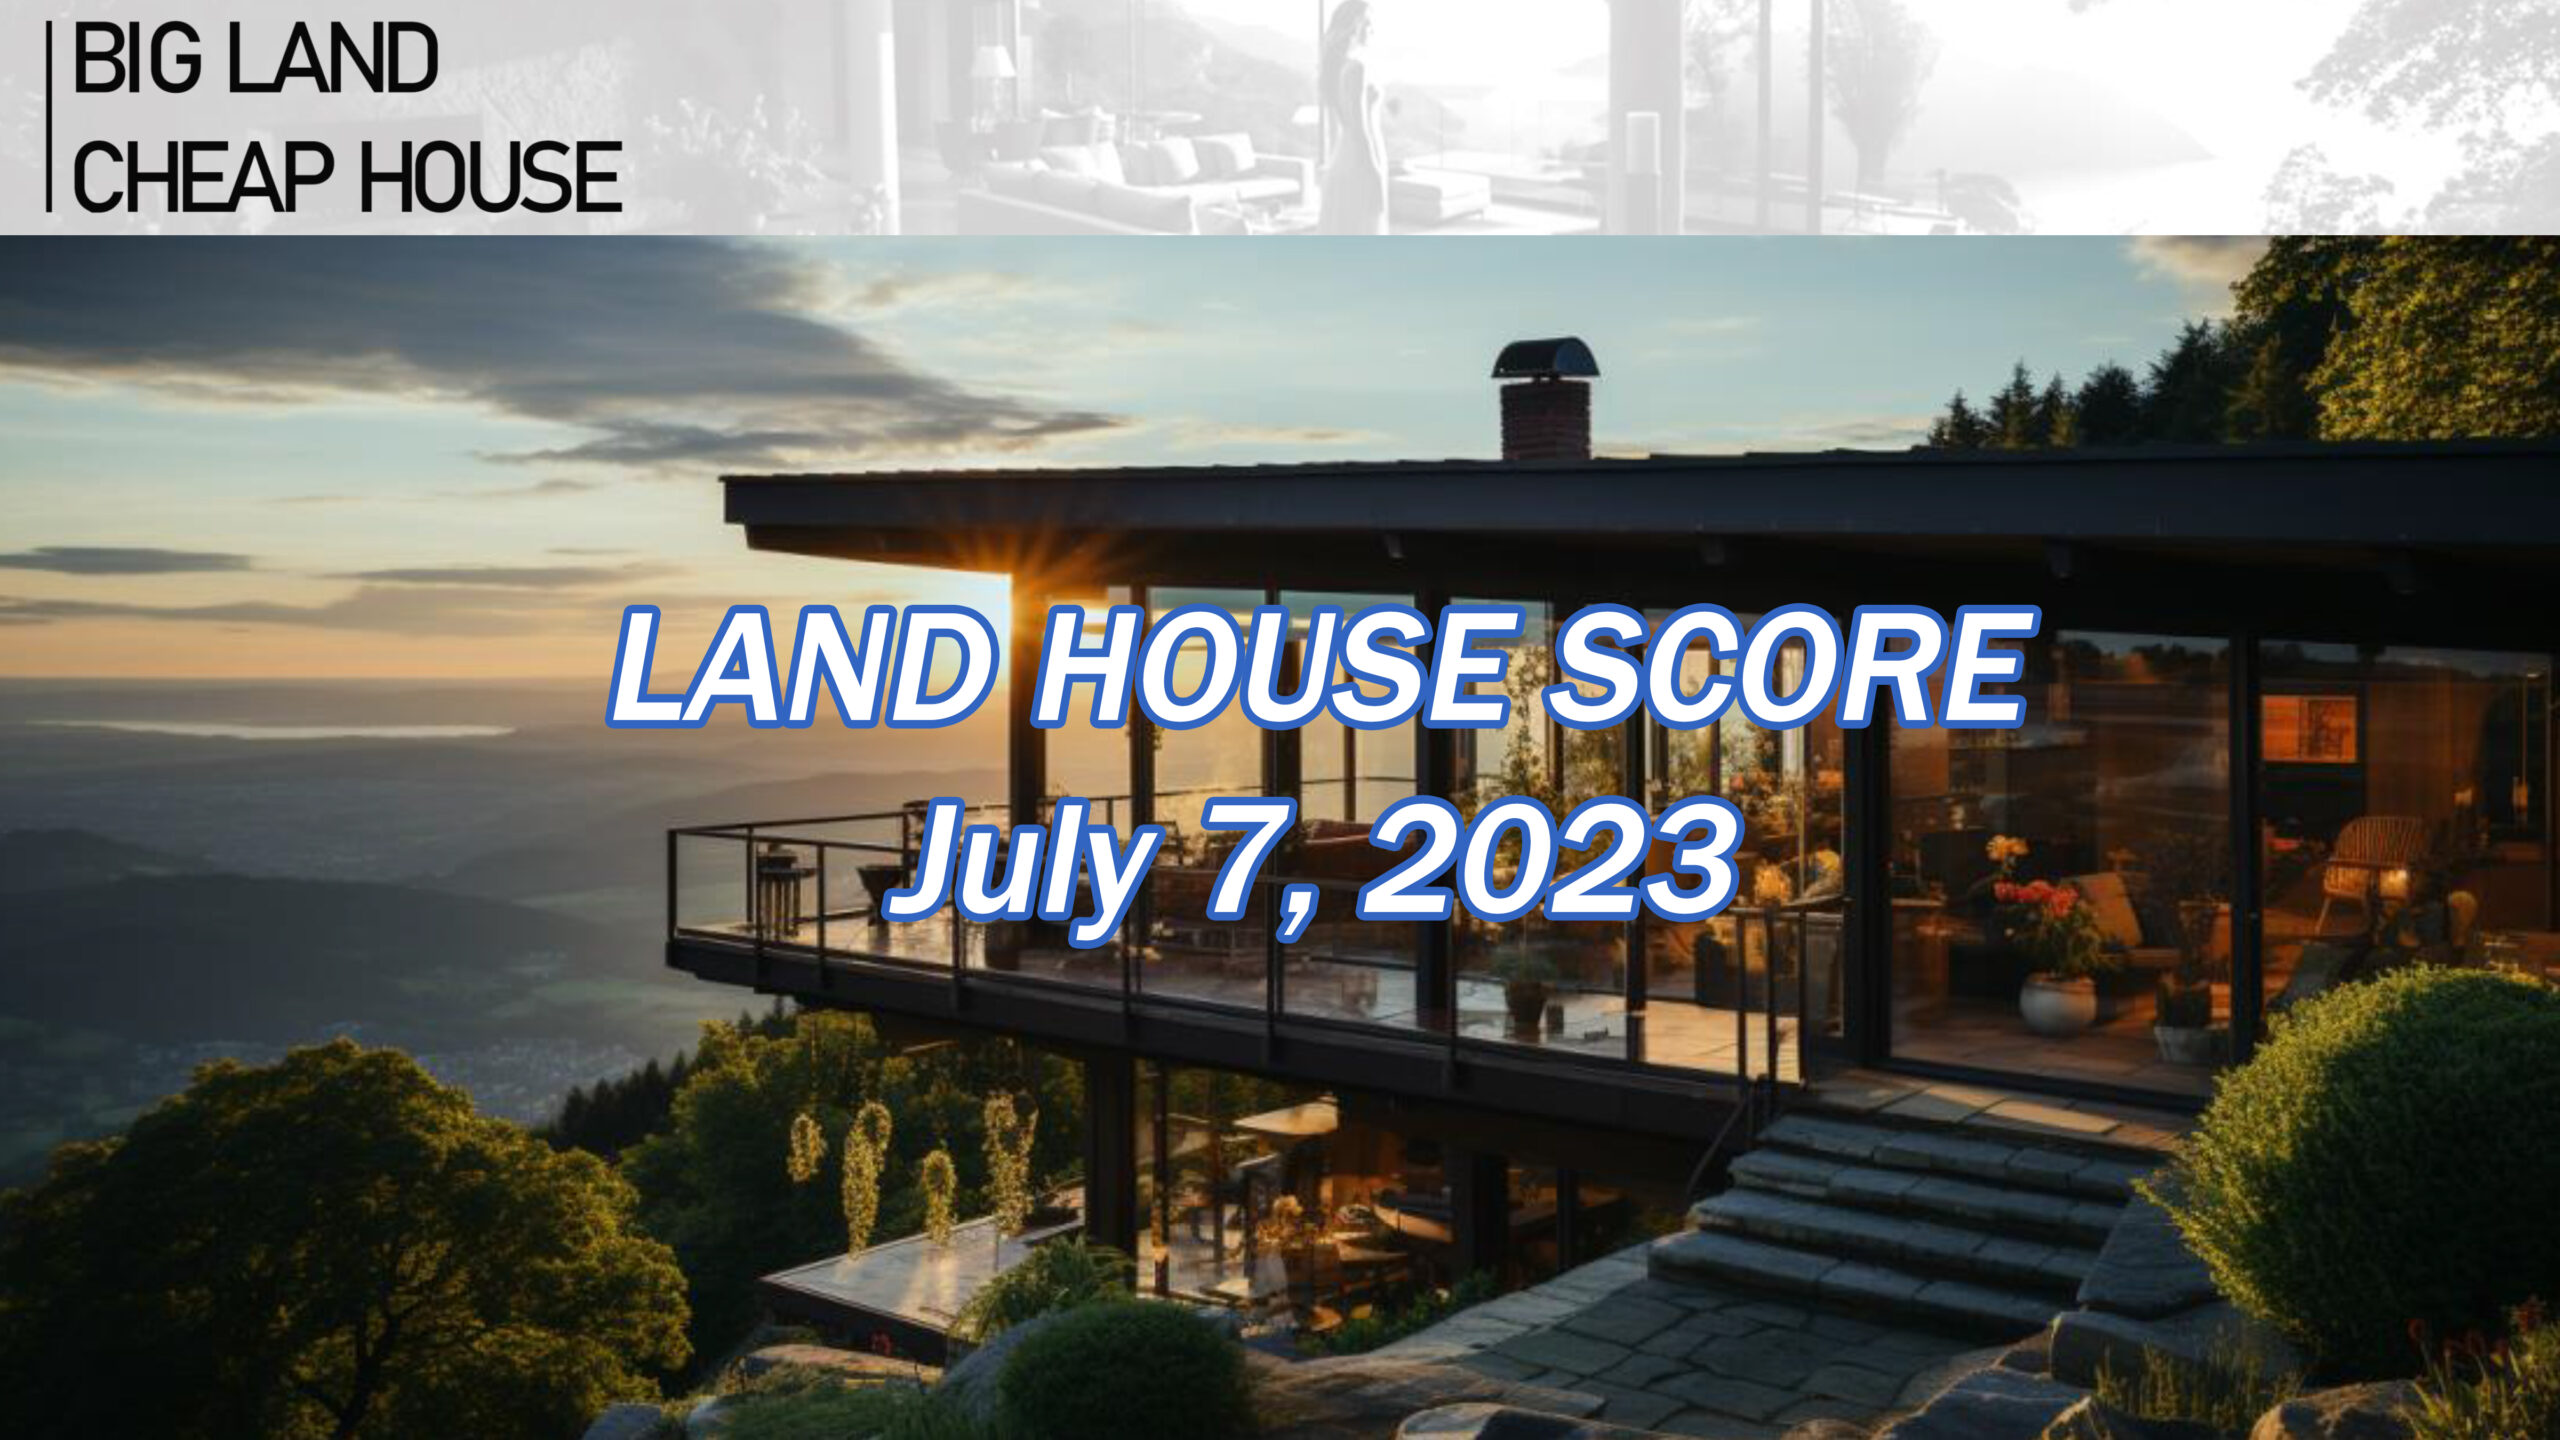 Big Land Cheap House, Land House Score